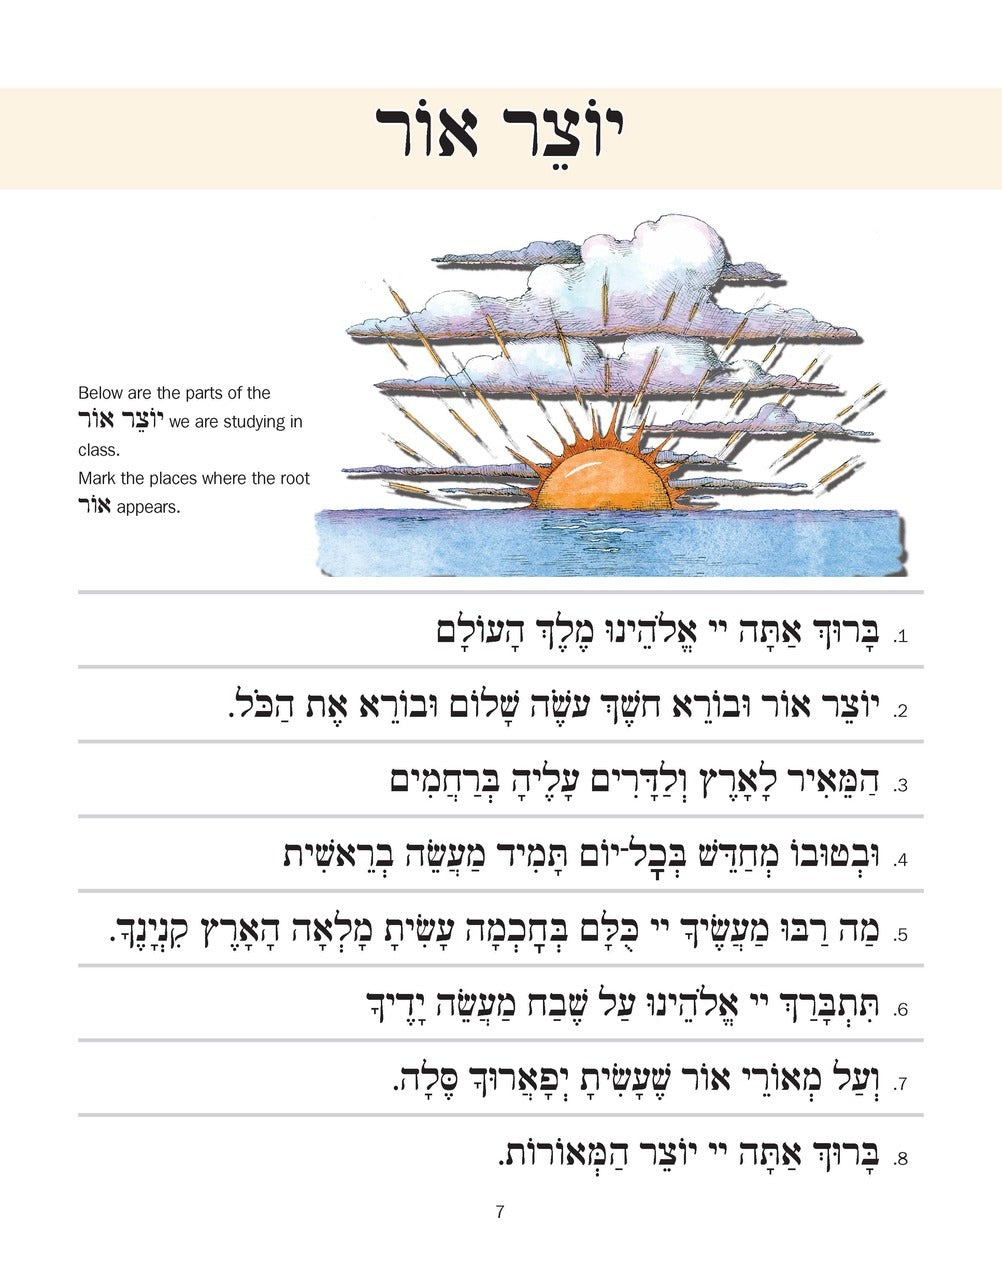 Journeys: Shabbat Morning Classroom Workbook